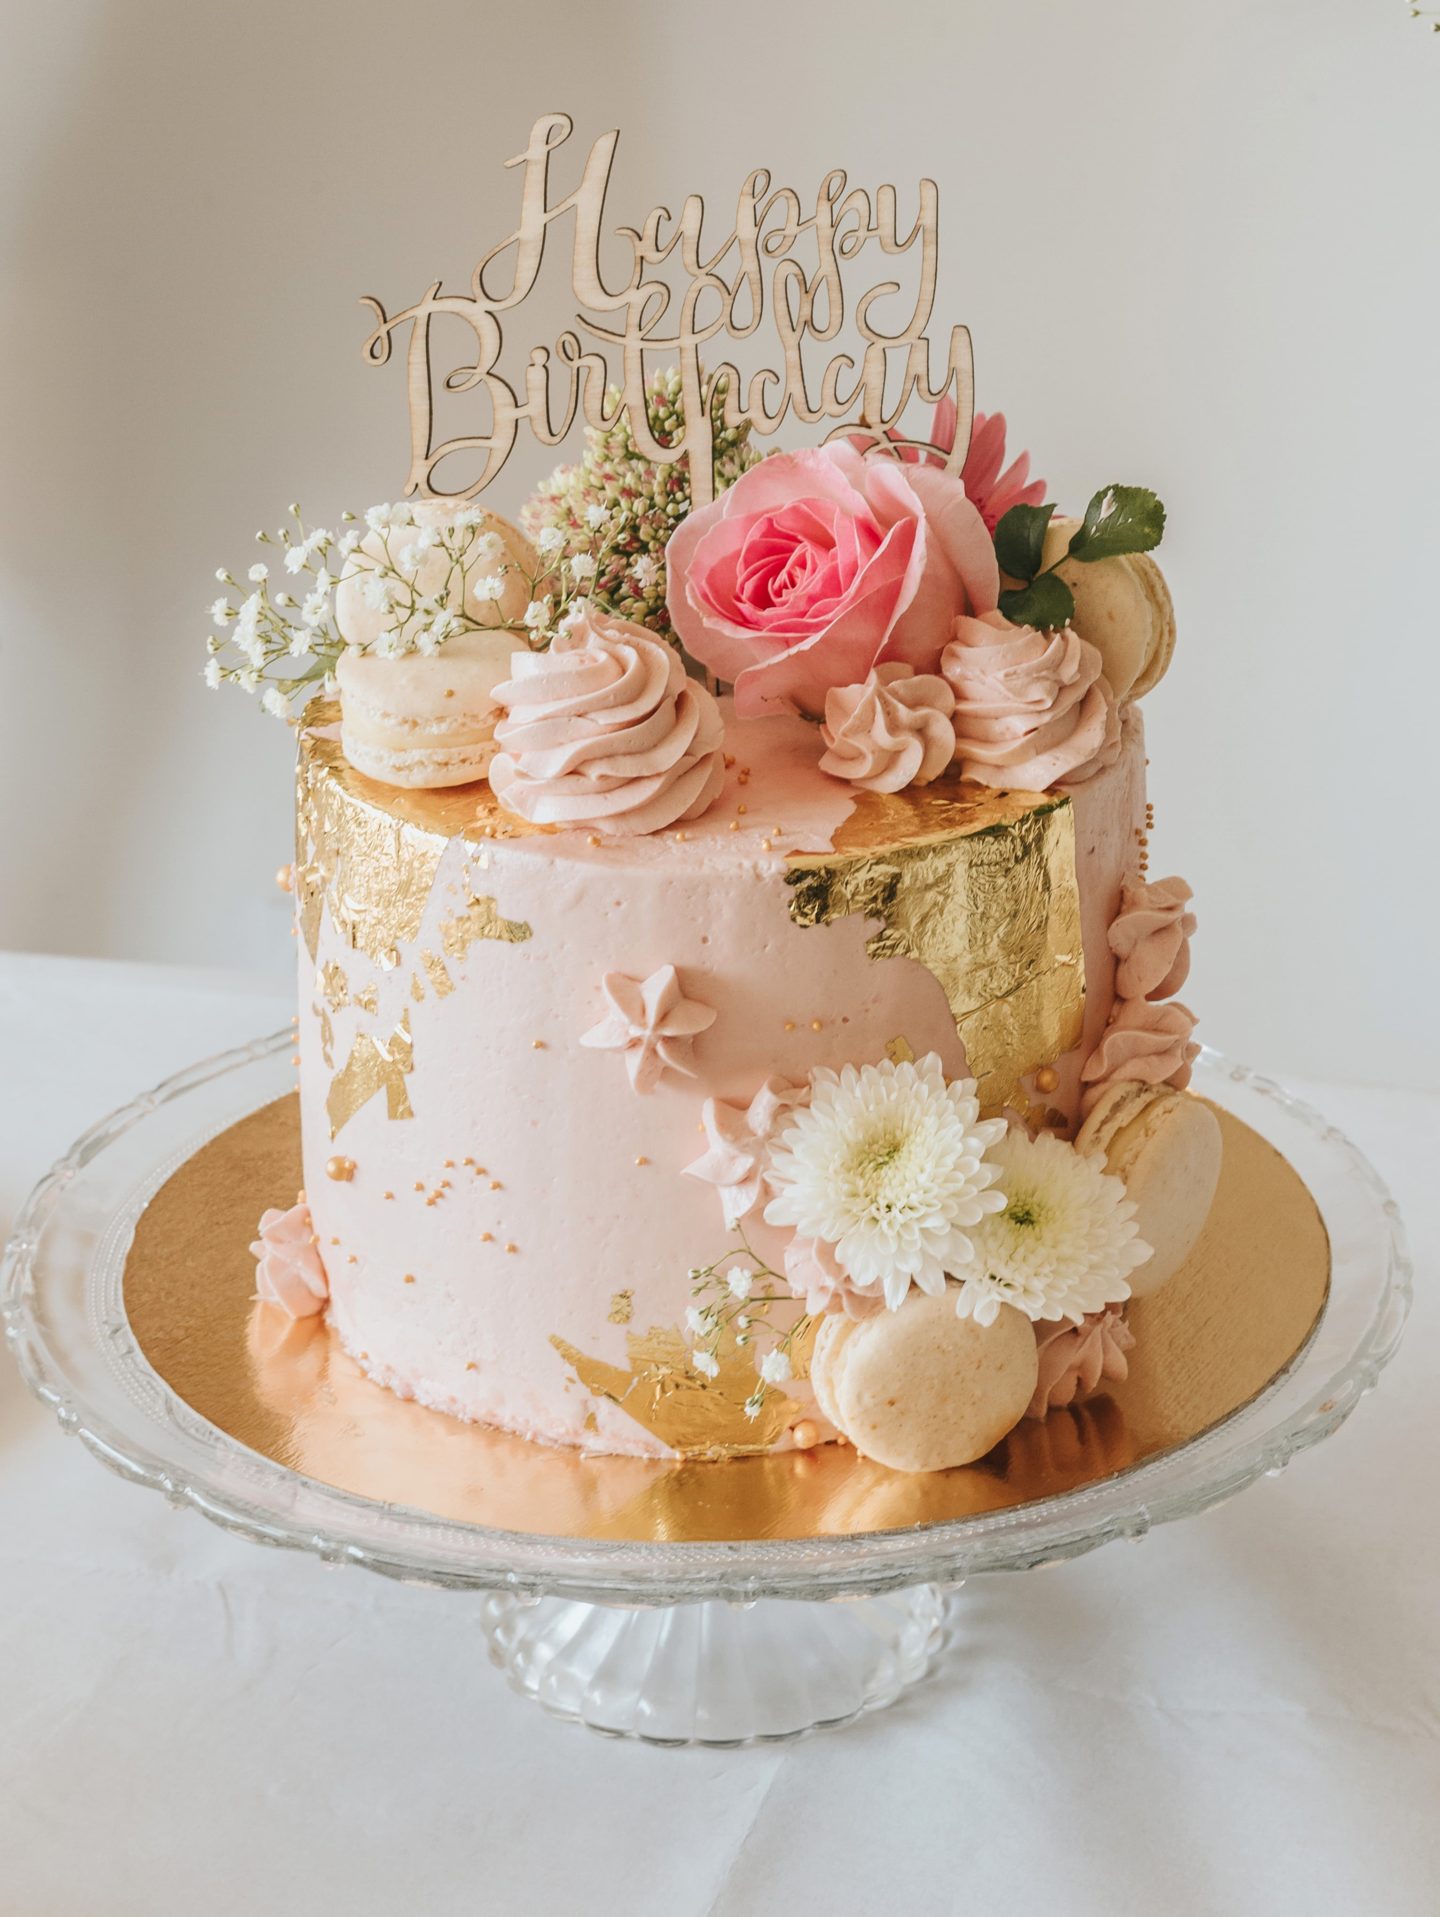 Birthday cake, decor, flower, rose.